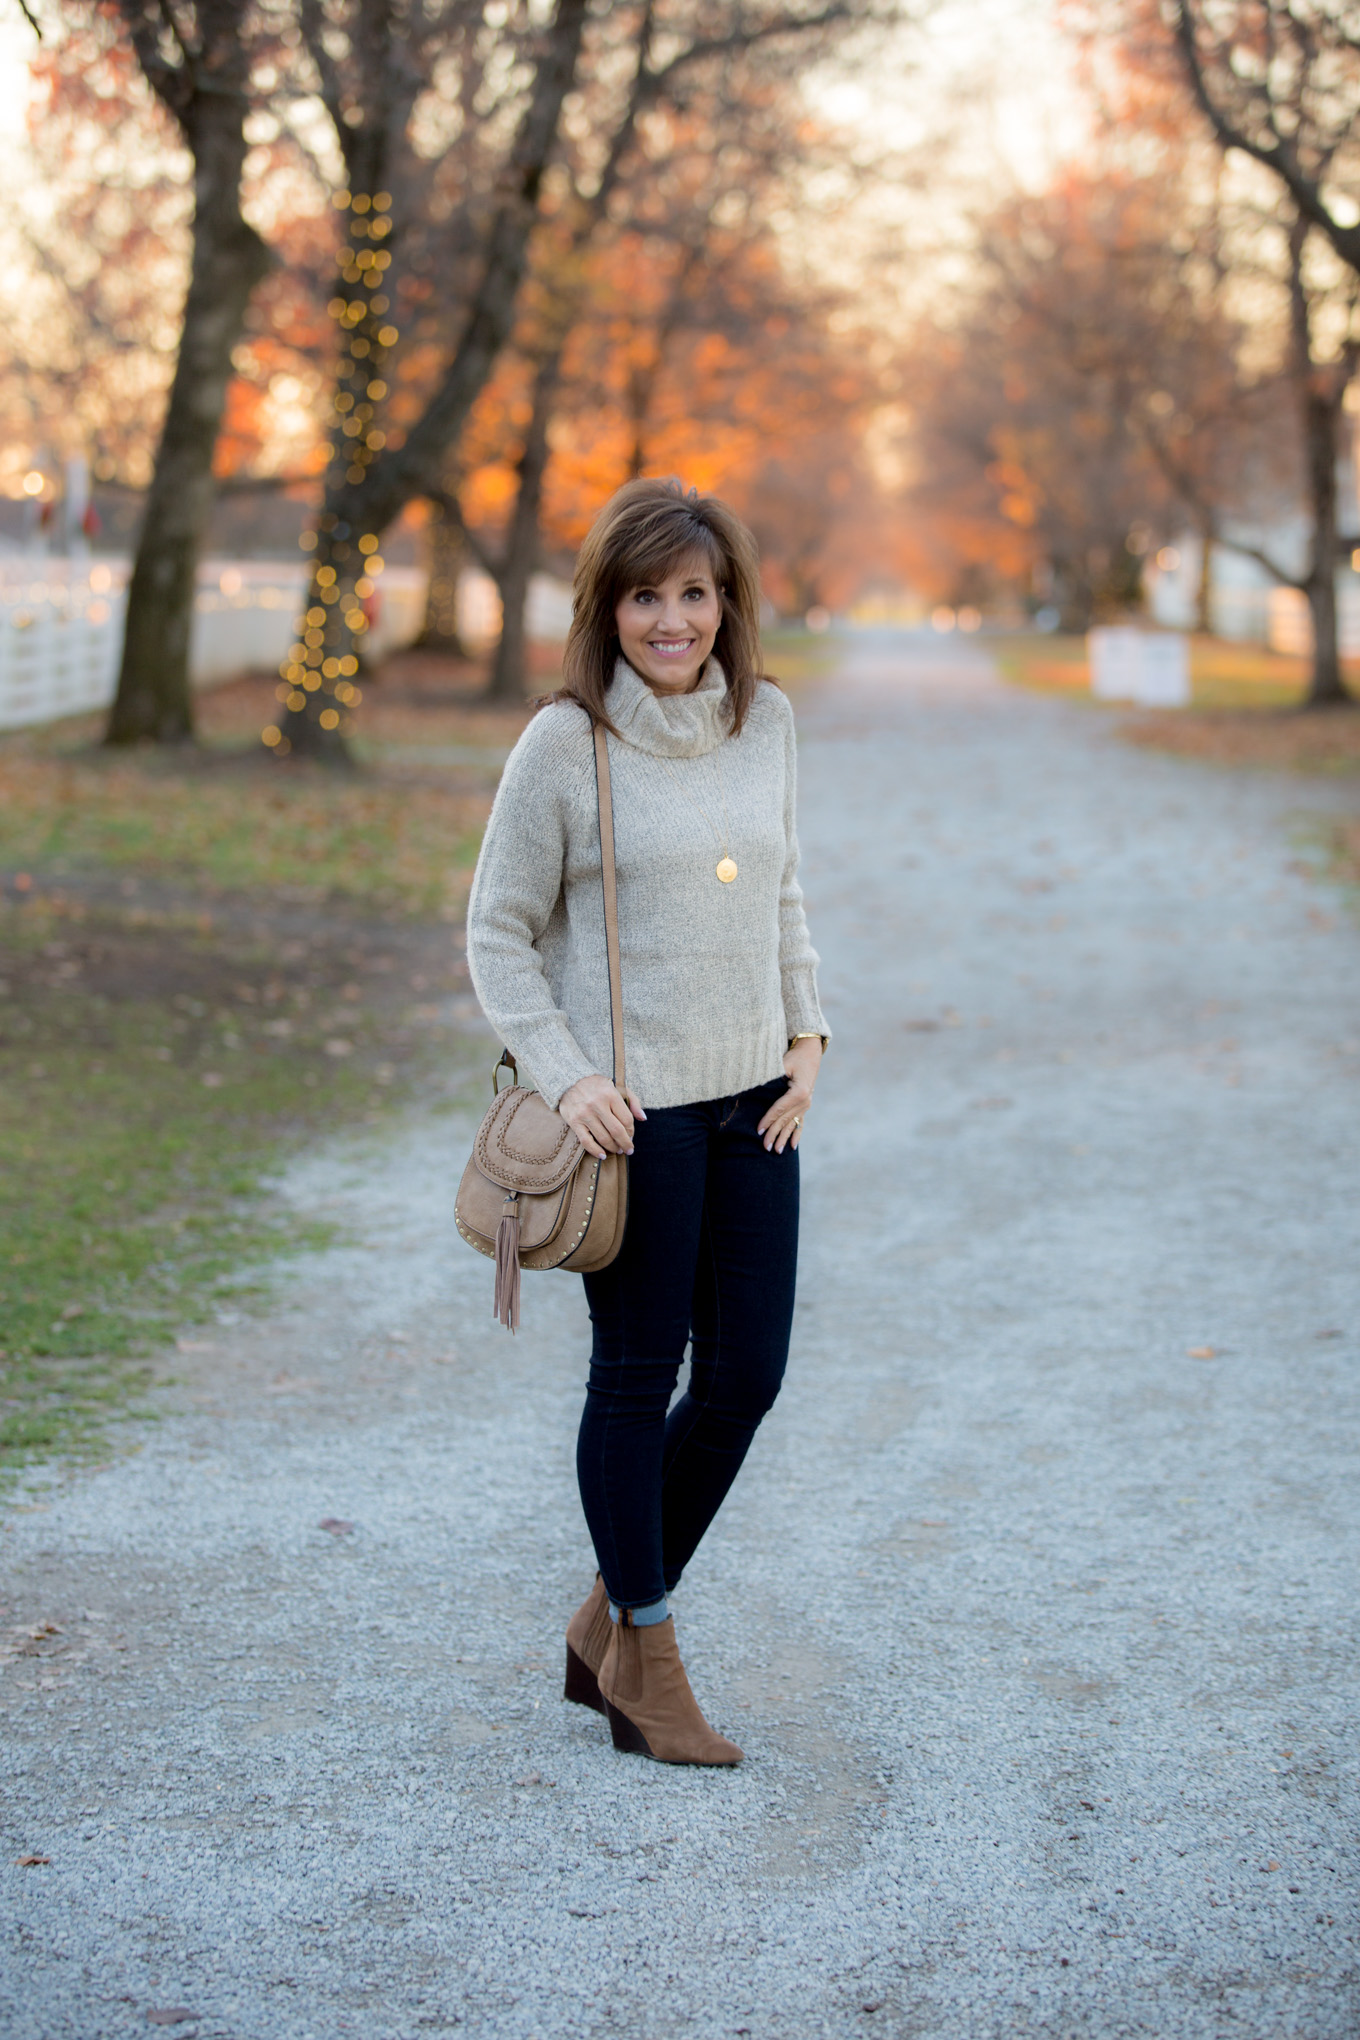 Fashion blogger, Cyndi Spivey, styling a cozy turtleneck sweater for winter fashion.